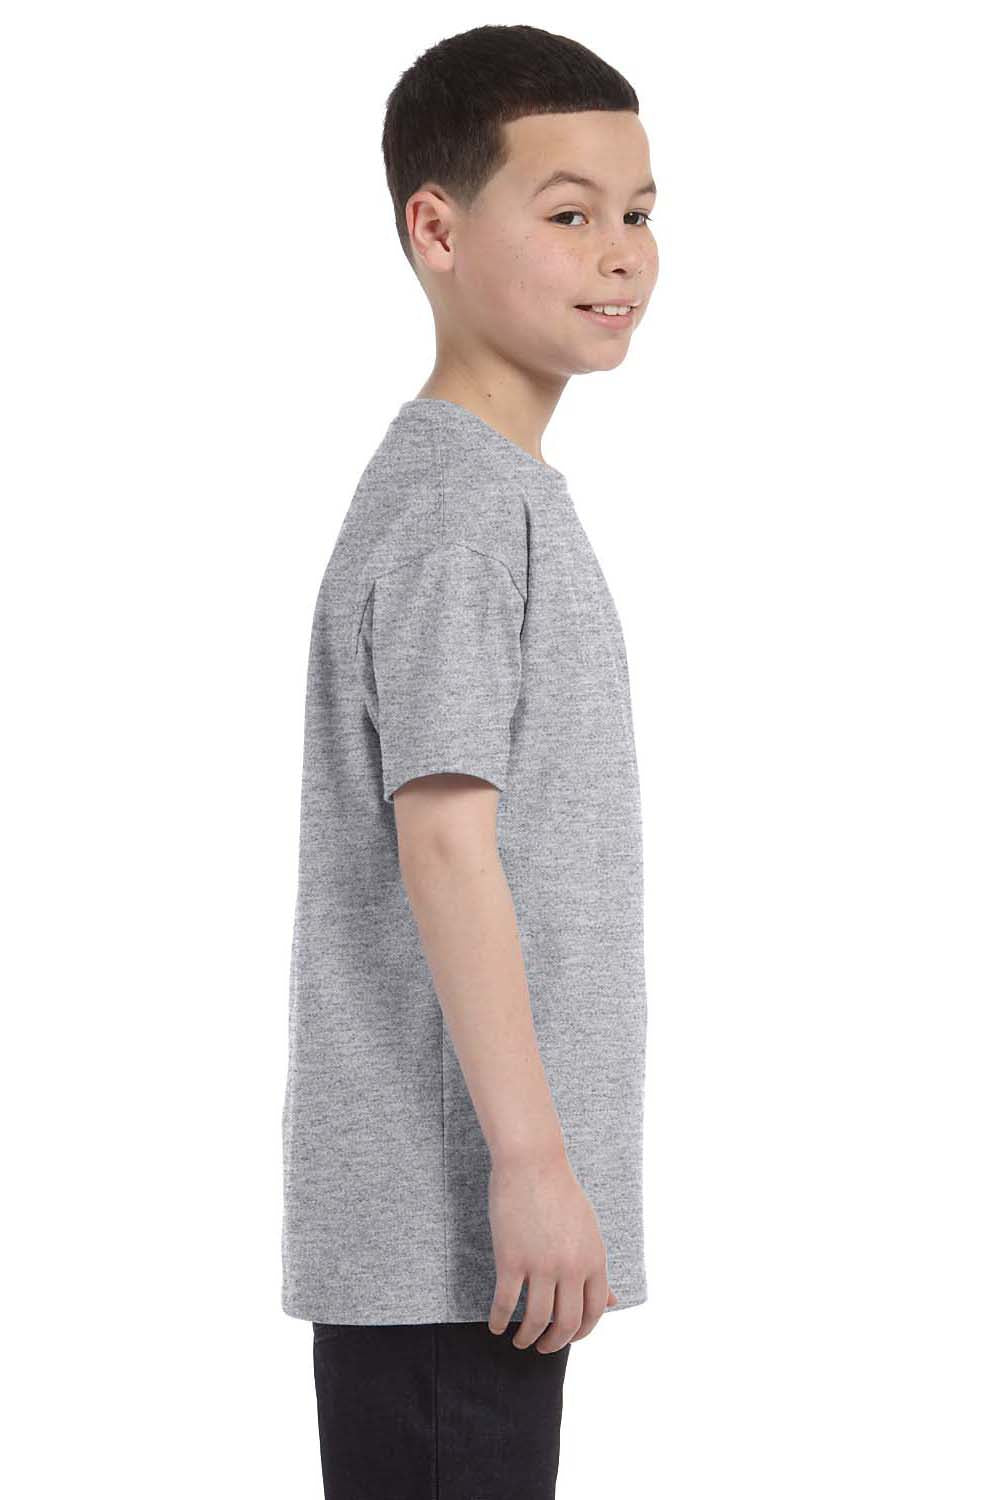 Jerzees 29B Youth Dri-Power Moisture Wicking Short Sleeve Crewneck T-Shirt Oxford Grey Side